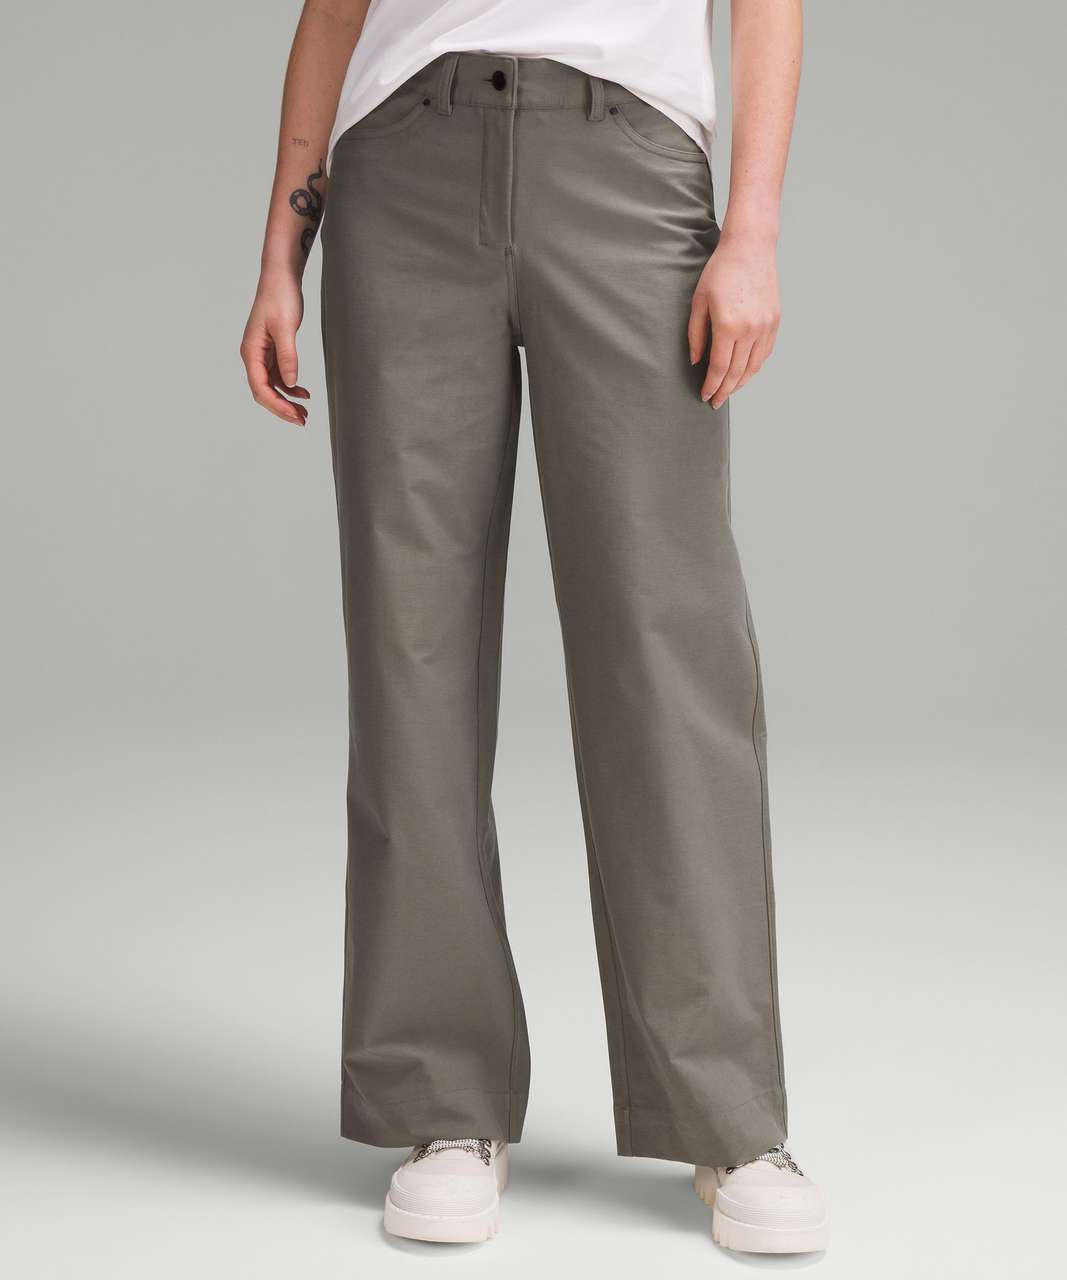 Lululemon City Sleek 5 Pocket High-Rise Wide-Leg Pant Full Length *Light Utilitech - Grey Sage